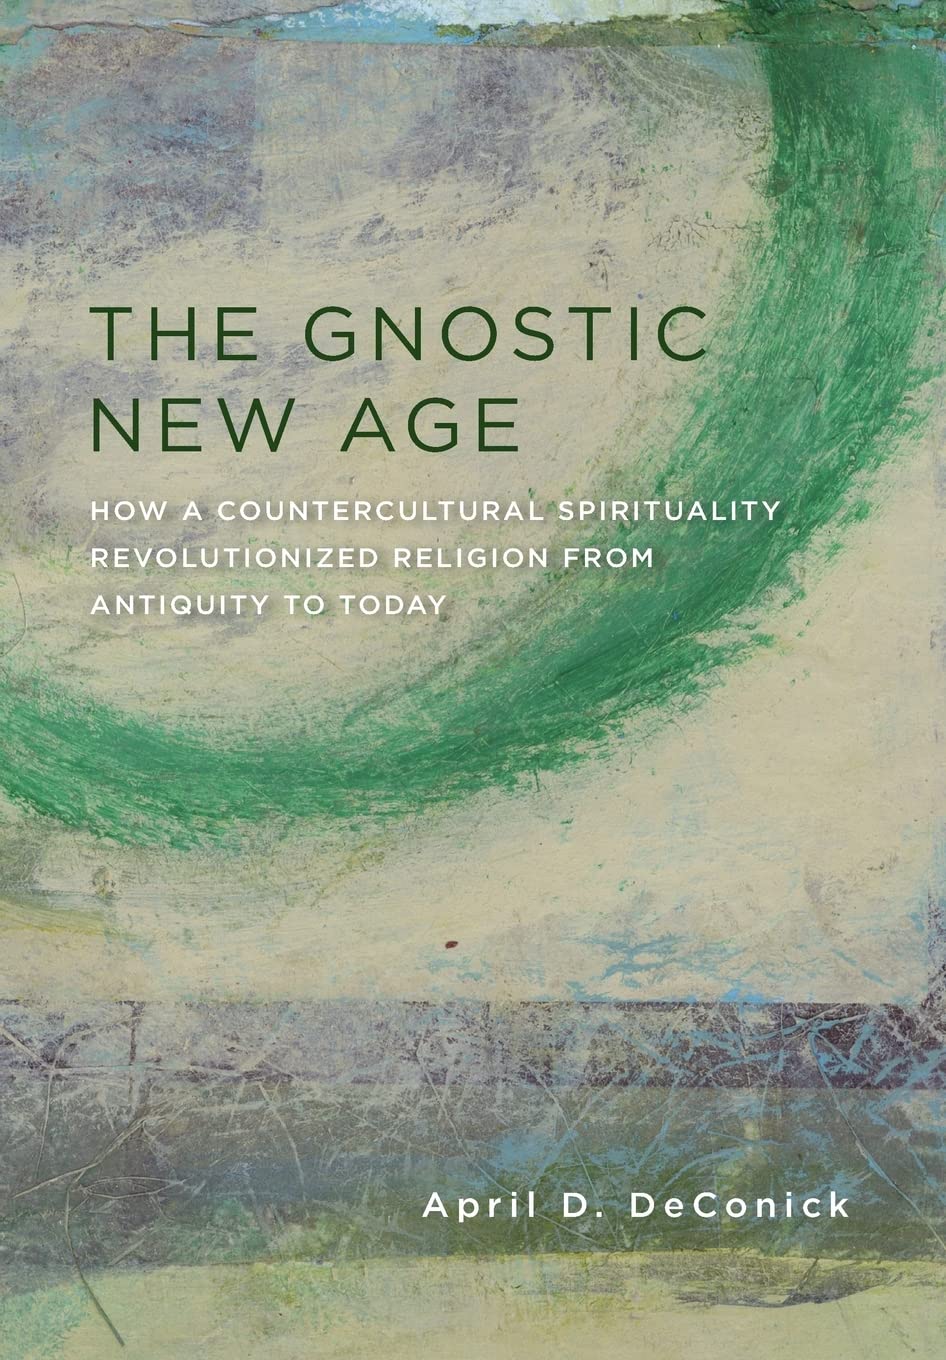 April D. Deconick: Gnostic New Age (2016, Columbia University Press)